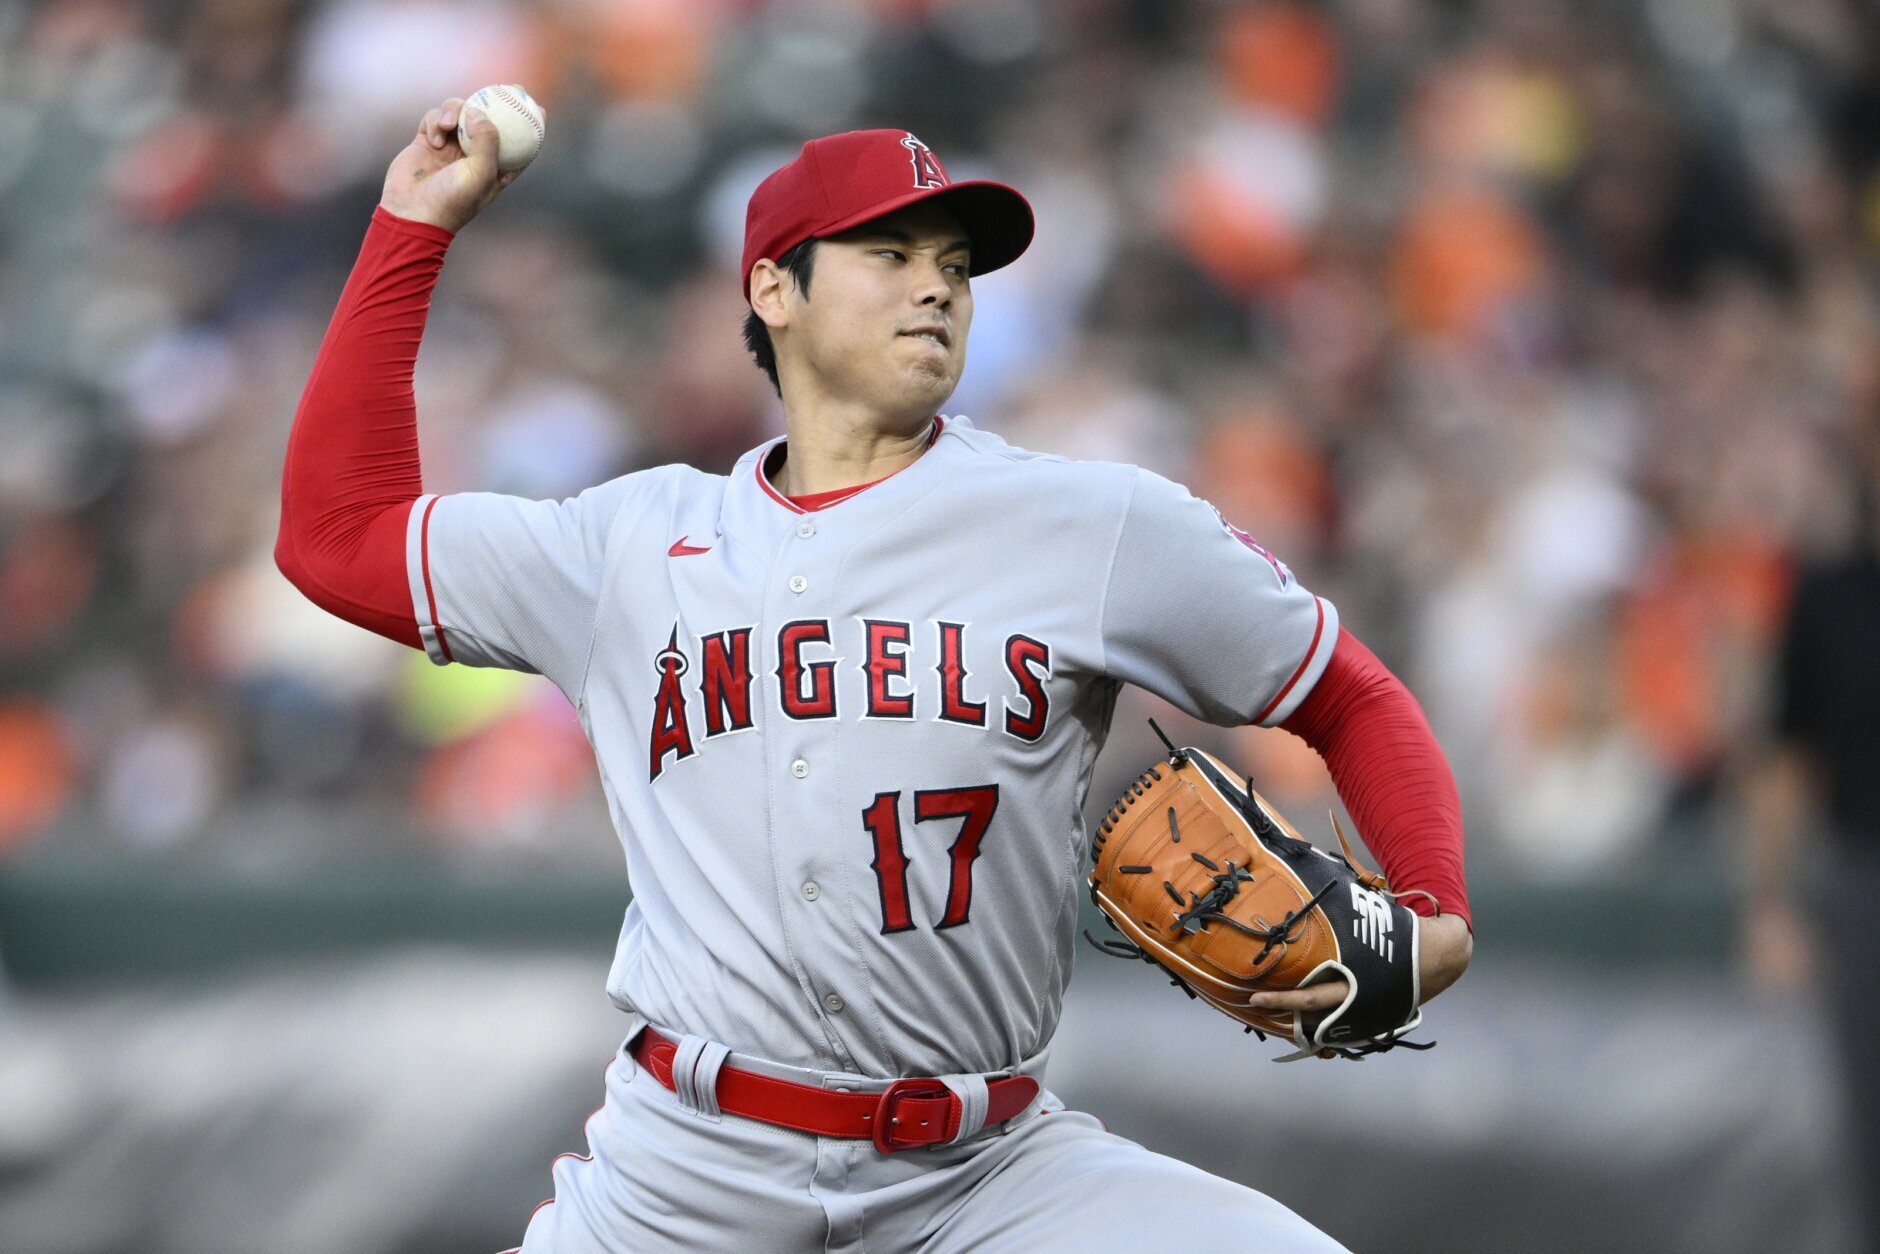 Shohei Ohtani 7 Los Angeles Angels the Eras tour player baseball